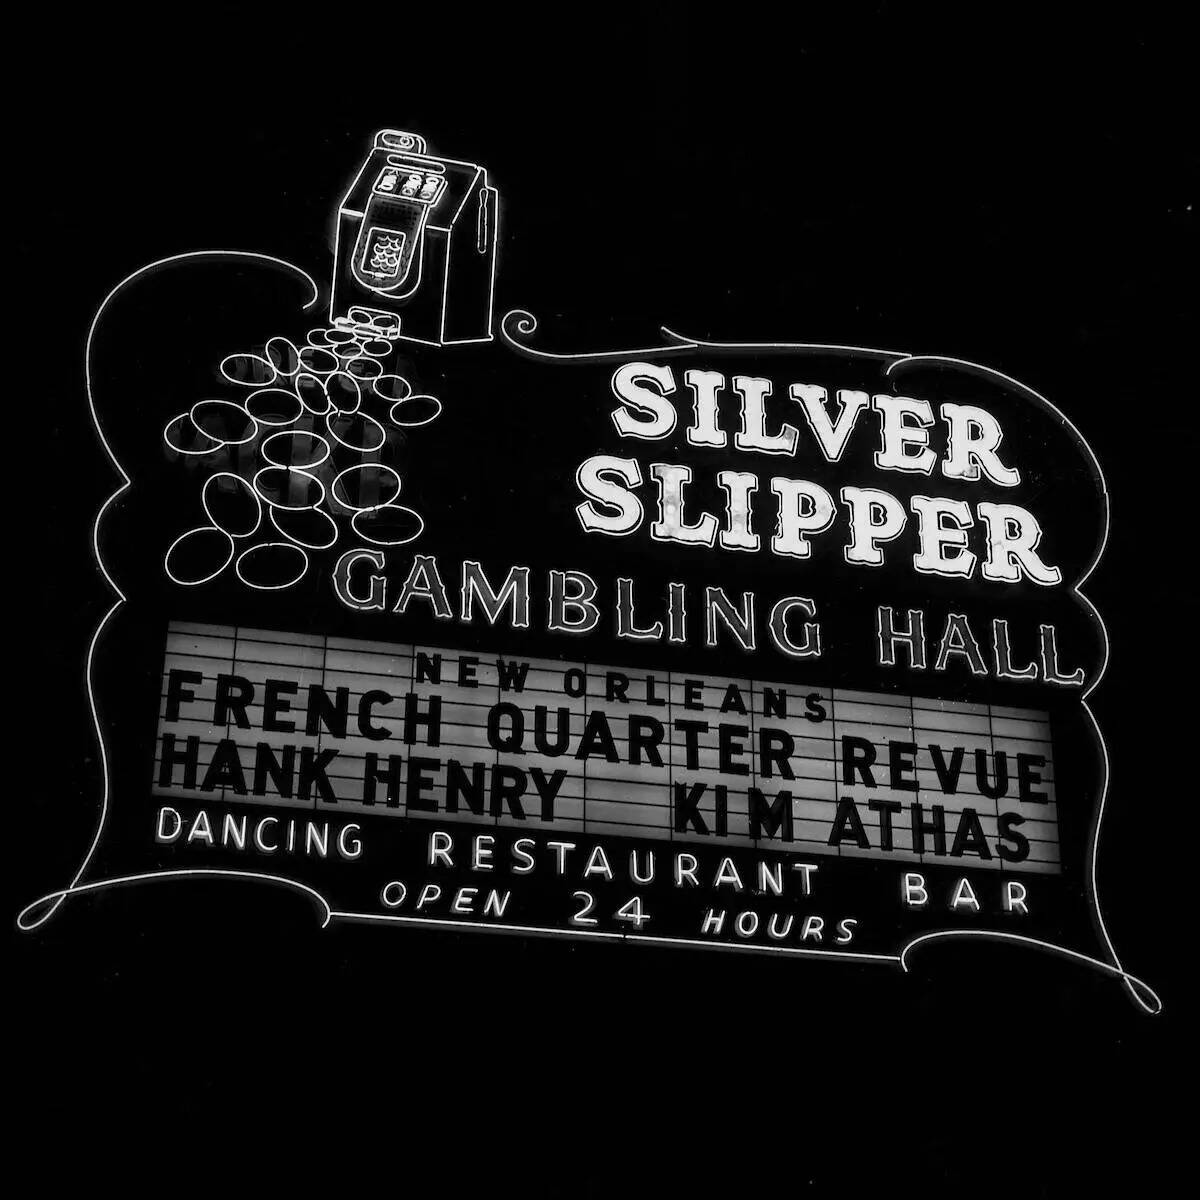 Silver Slipper Gambling Hall presenta la New Orleans French Quarter Revue, Hank Henry y Kim Ath ...